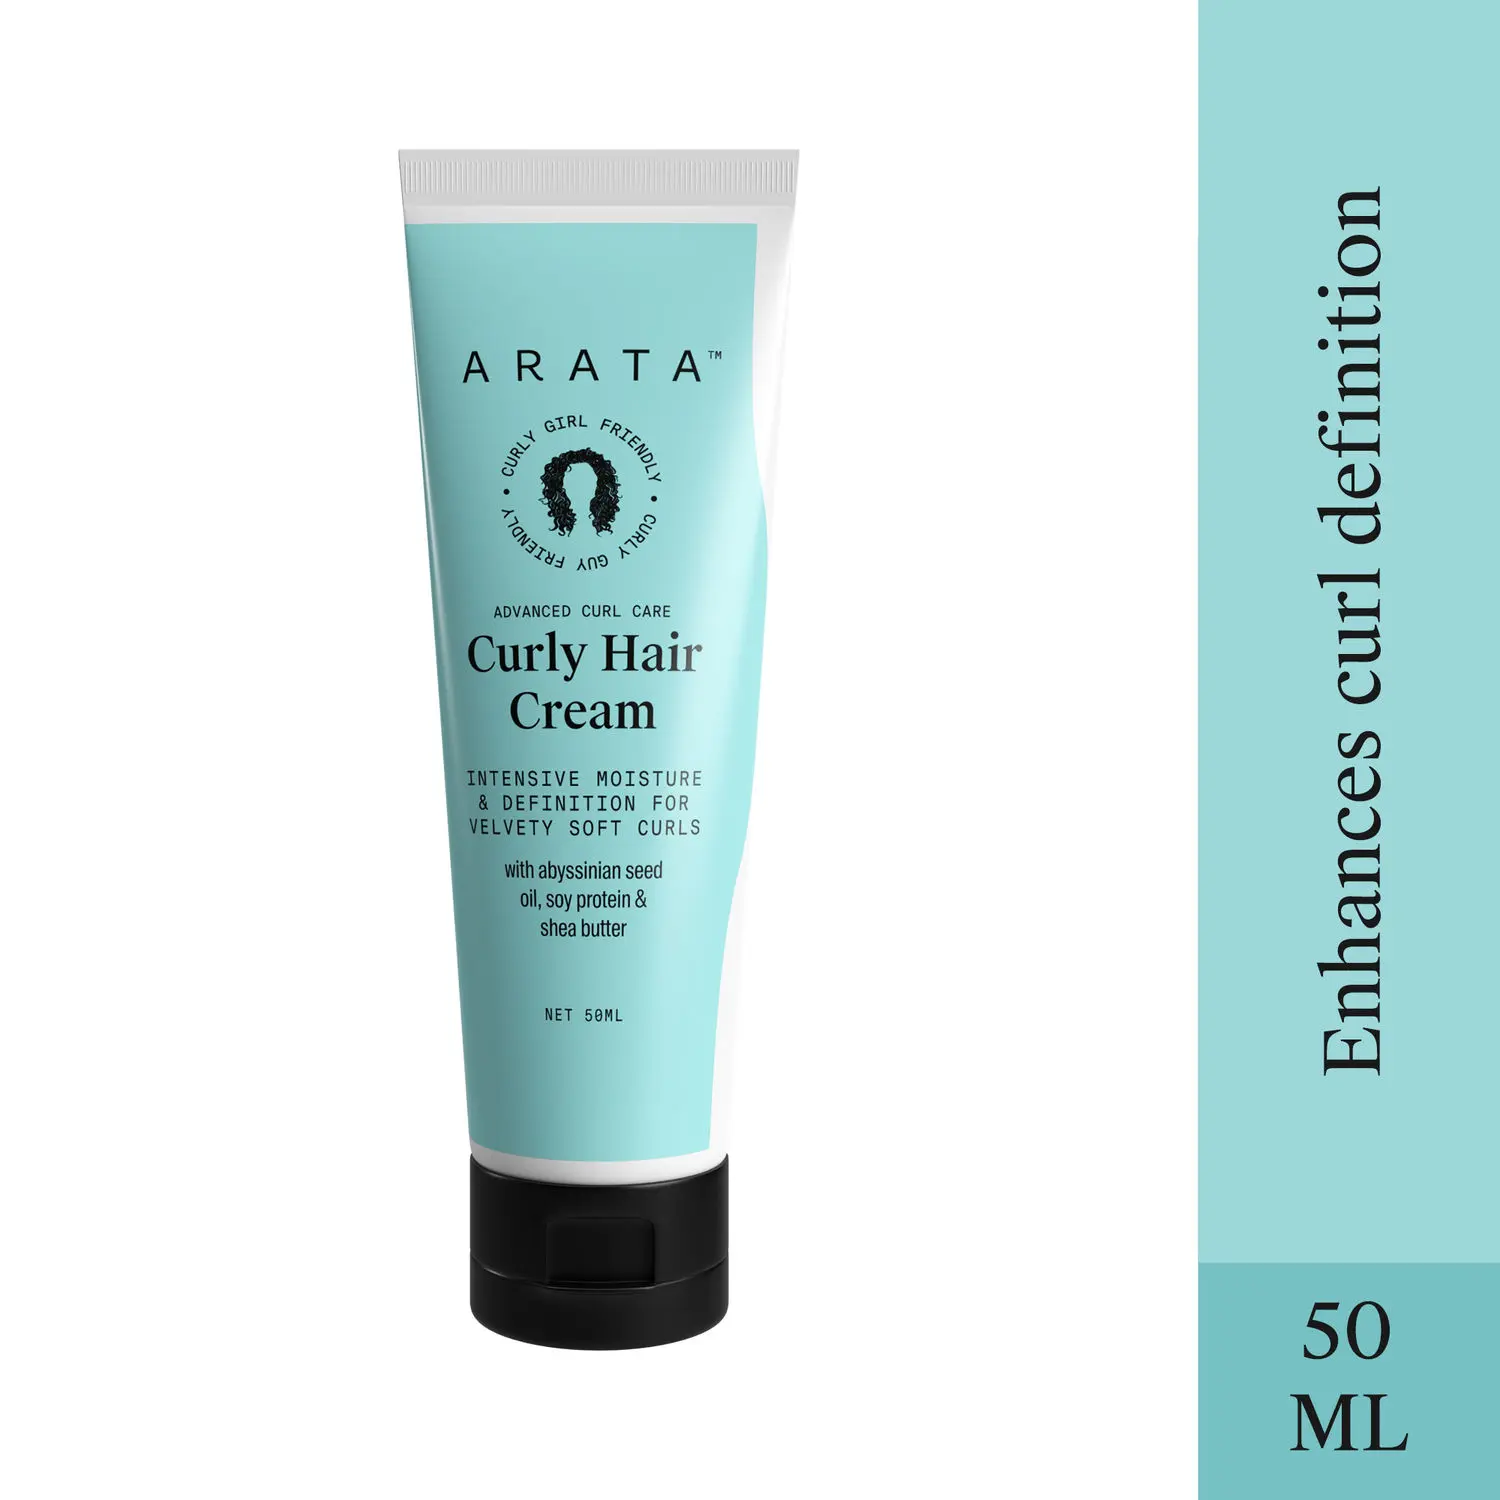 Arata Advanced Curl Care Curly Mini Hair Cream (50 ml)